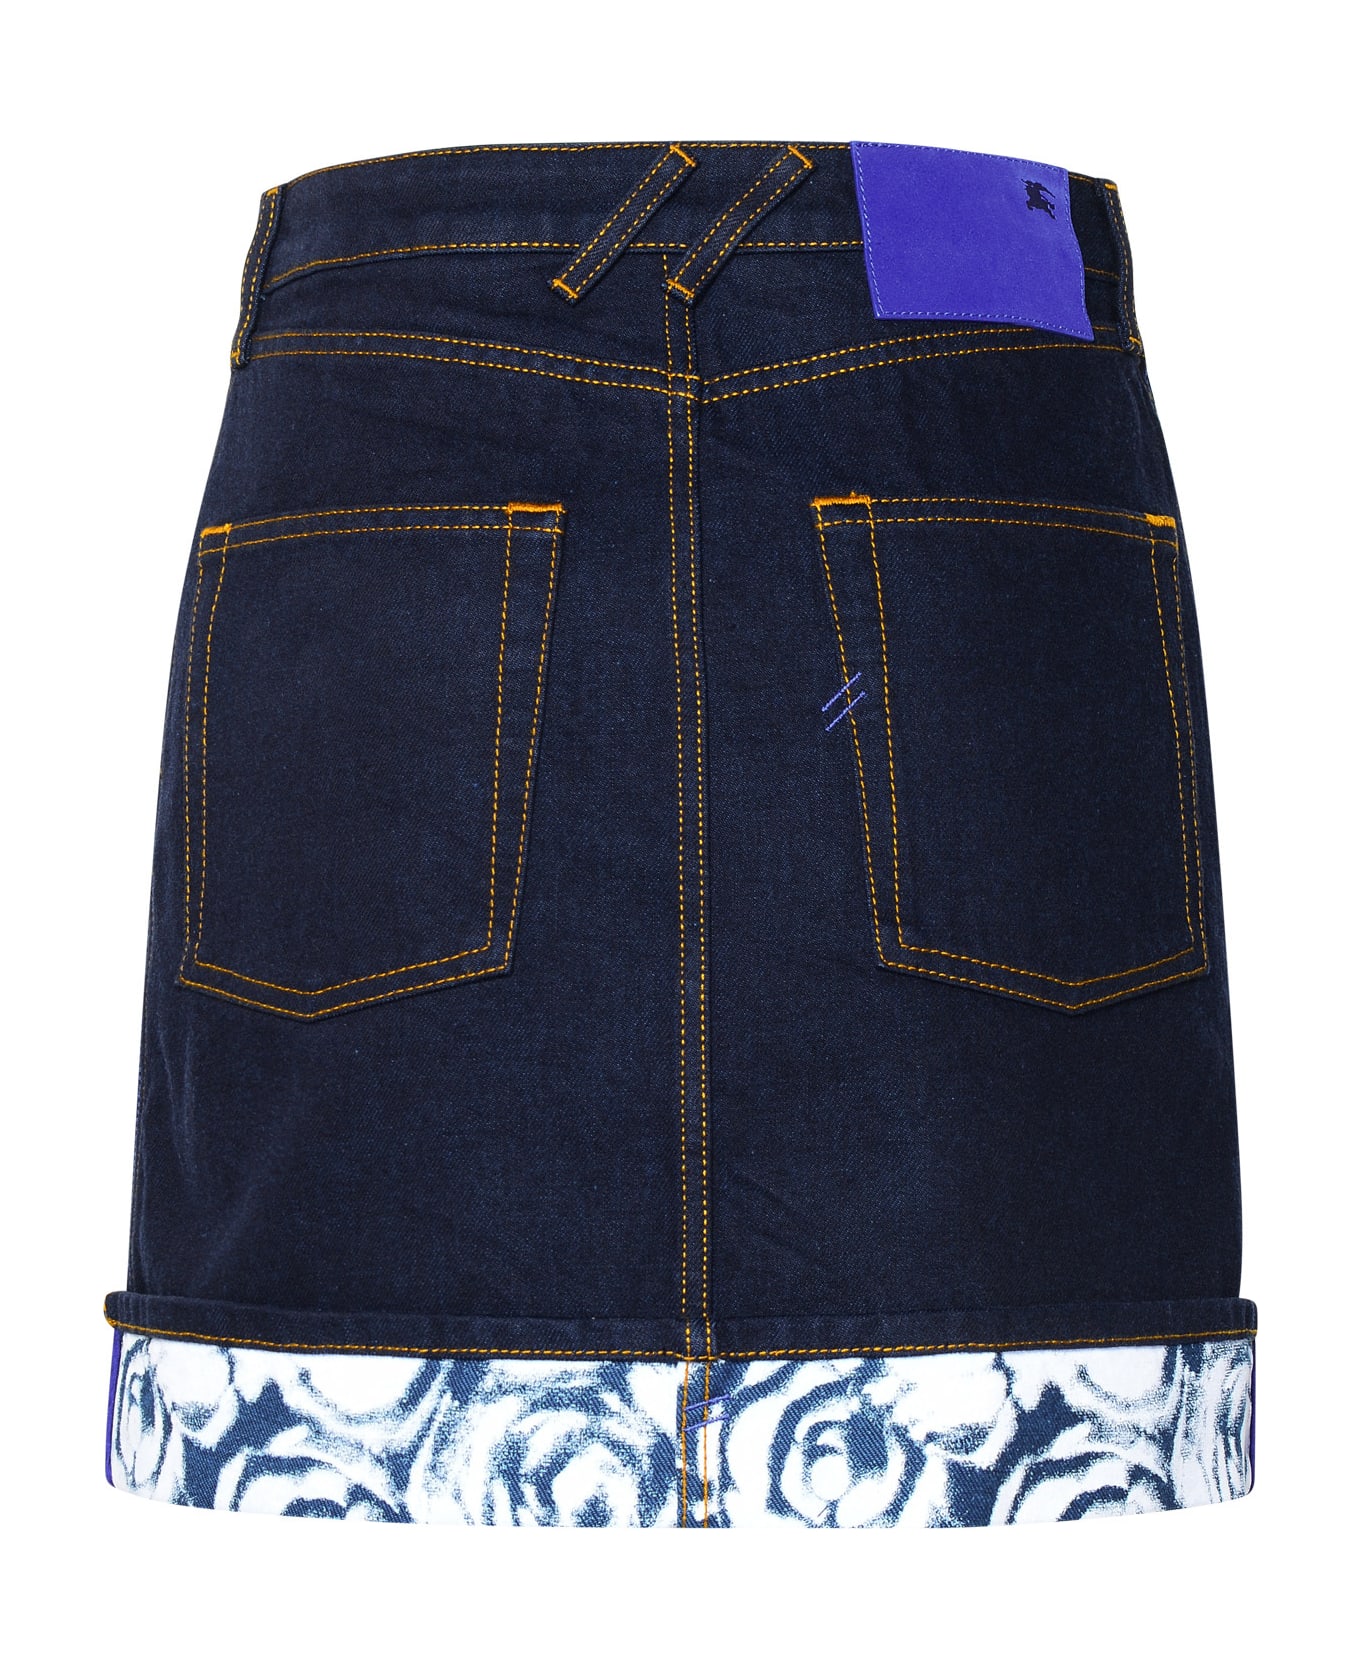 Burberry Indigo Blue Cotton Miniskirt - Blue